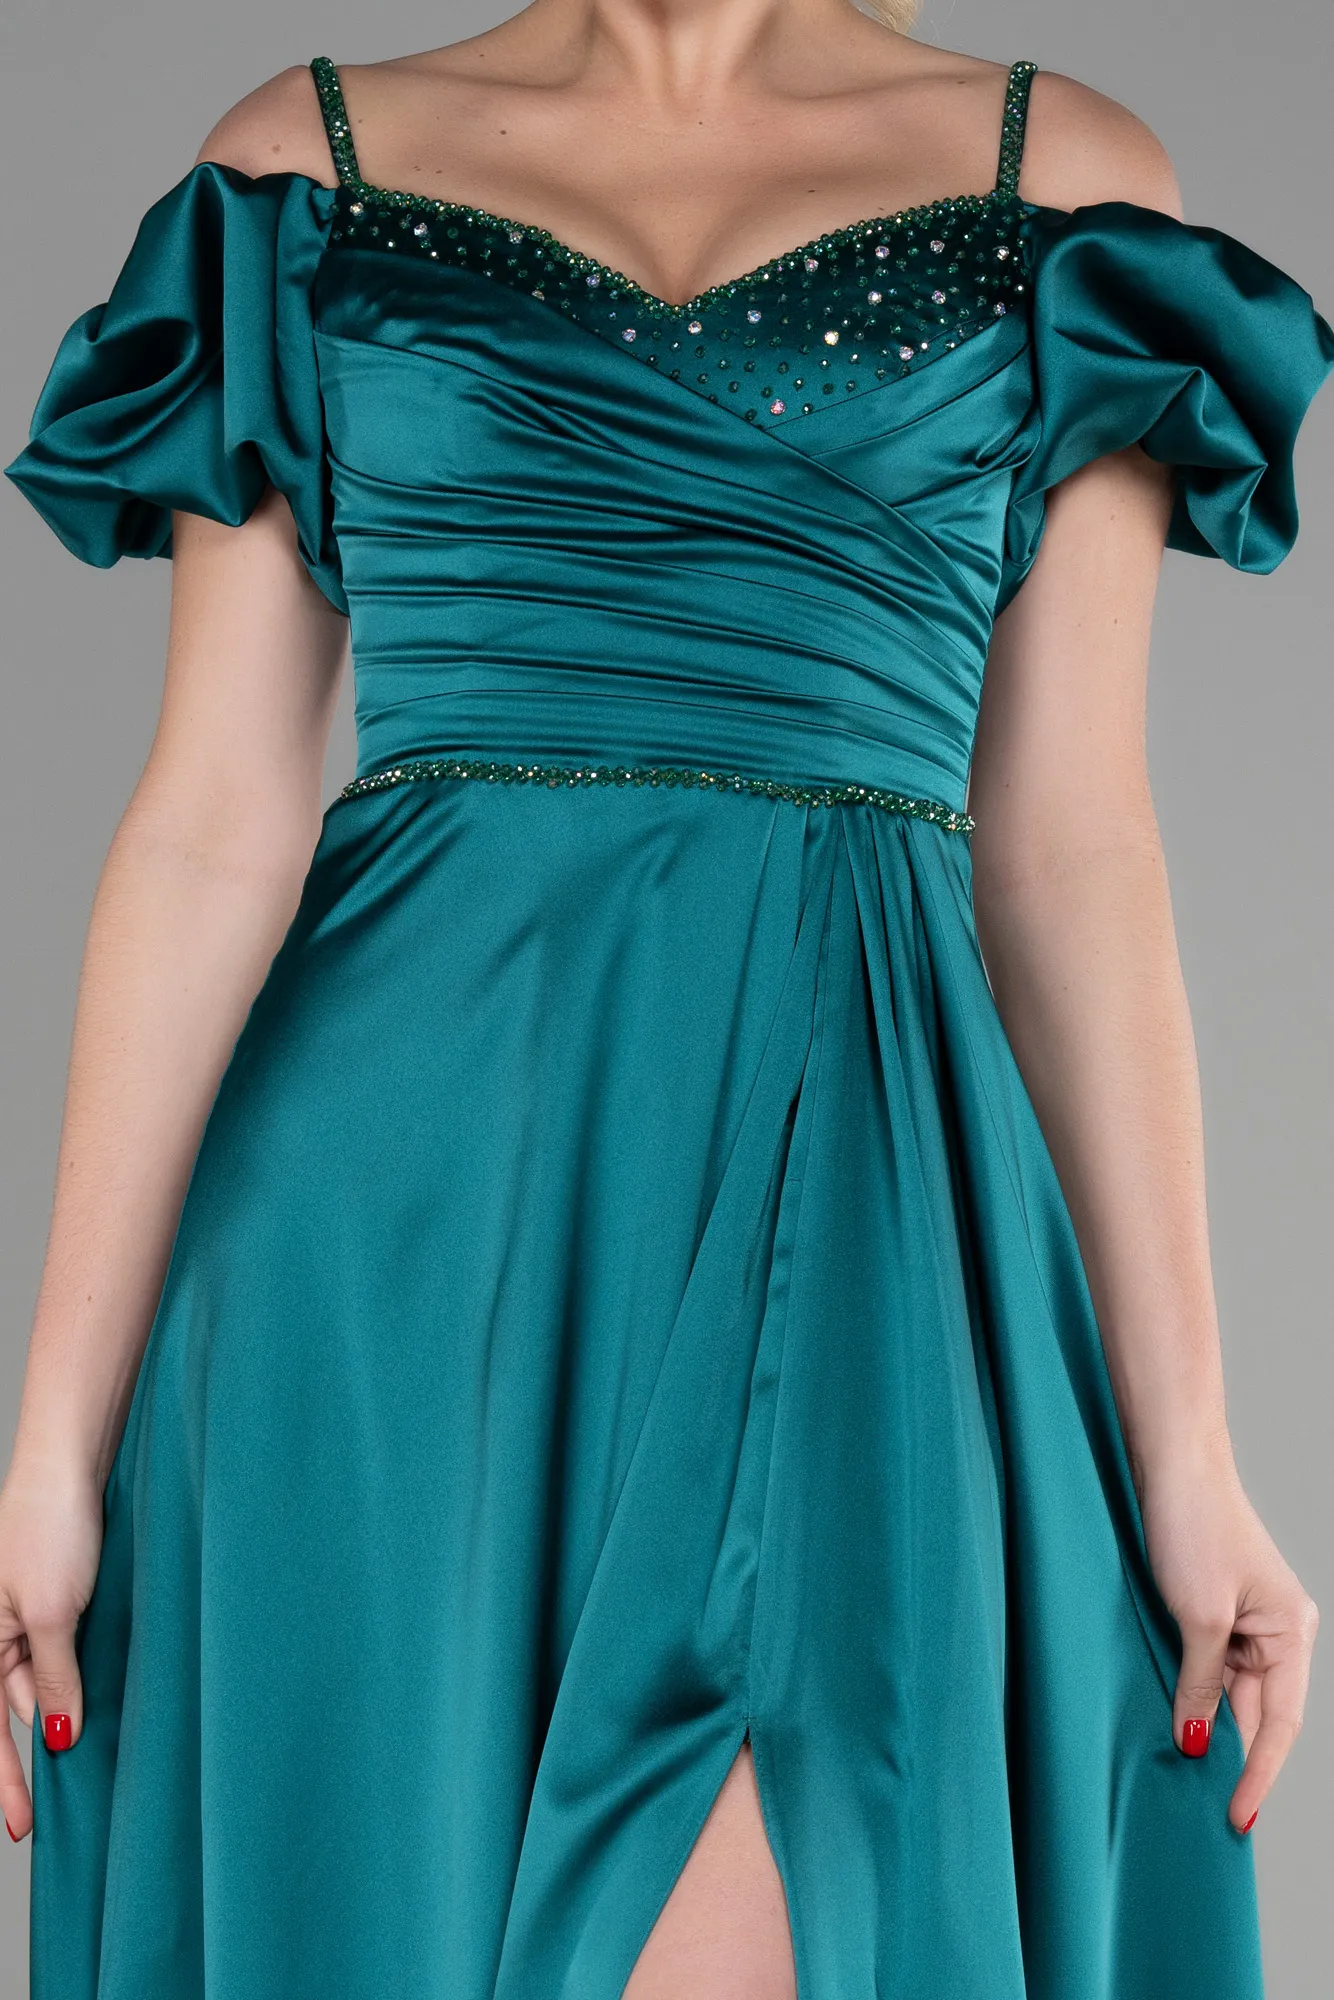 Emerald Green-Long Satin Evening Dress ABU3457